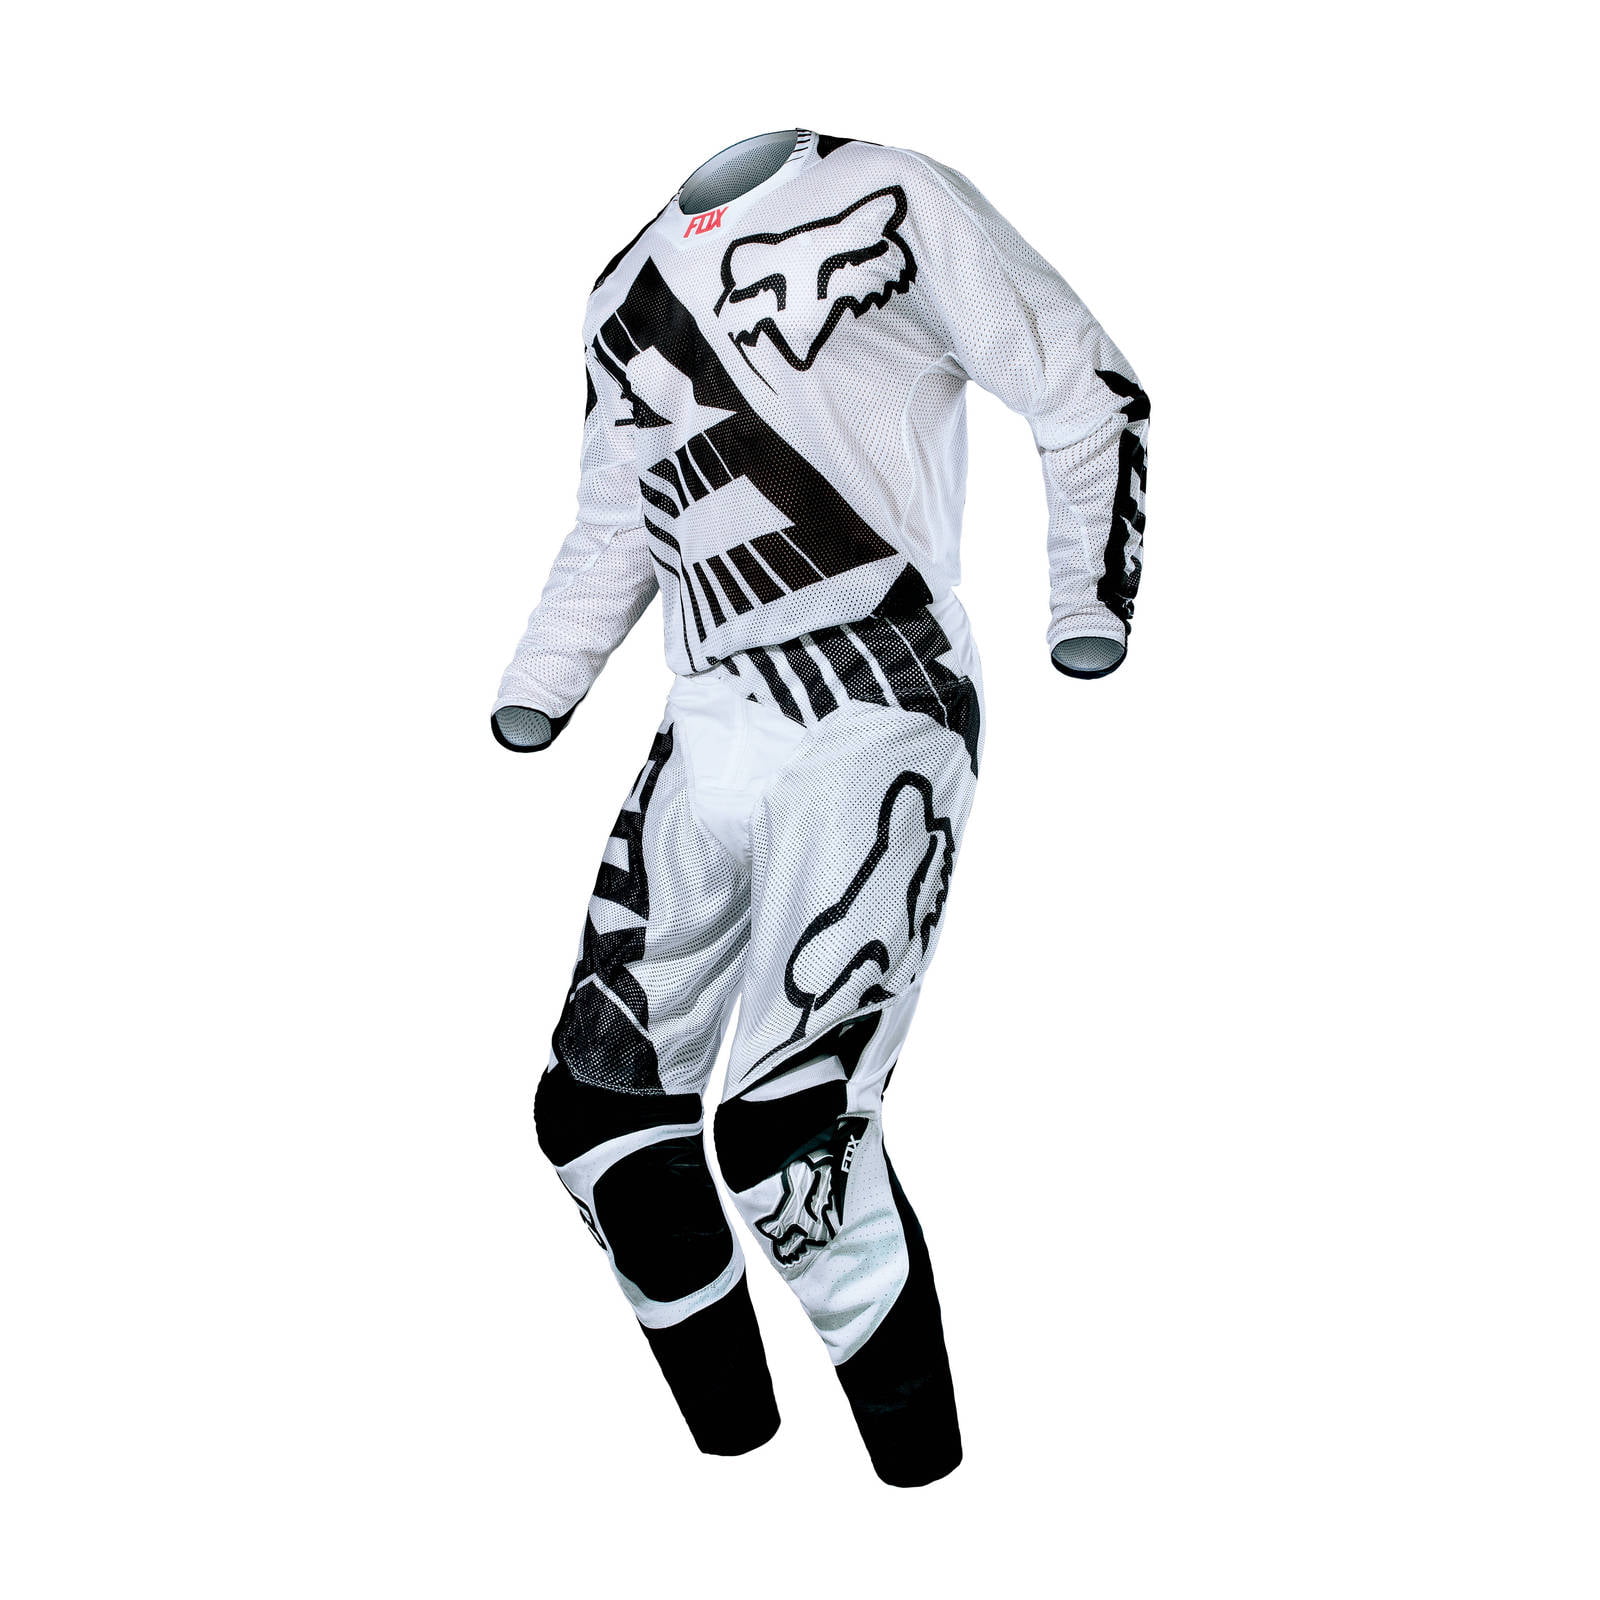 Cetak Baju Motocross Dengan Desain Impian Mu